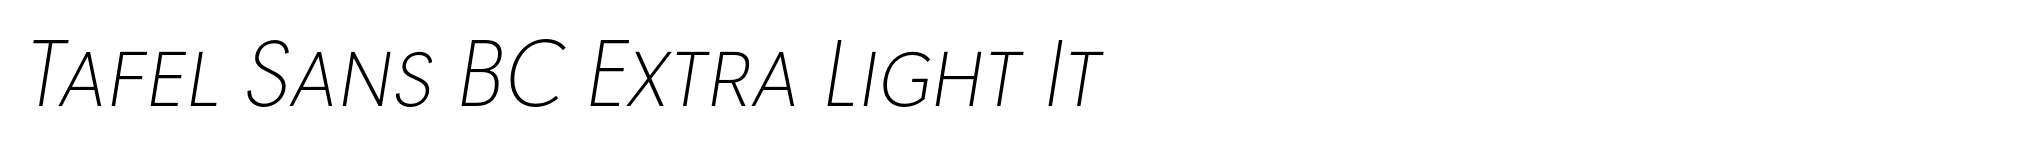 Tafel Sans BC Extra Light It image